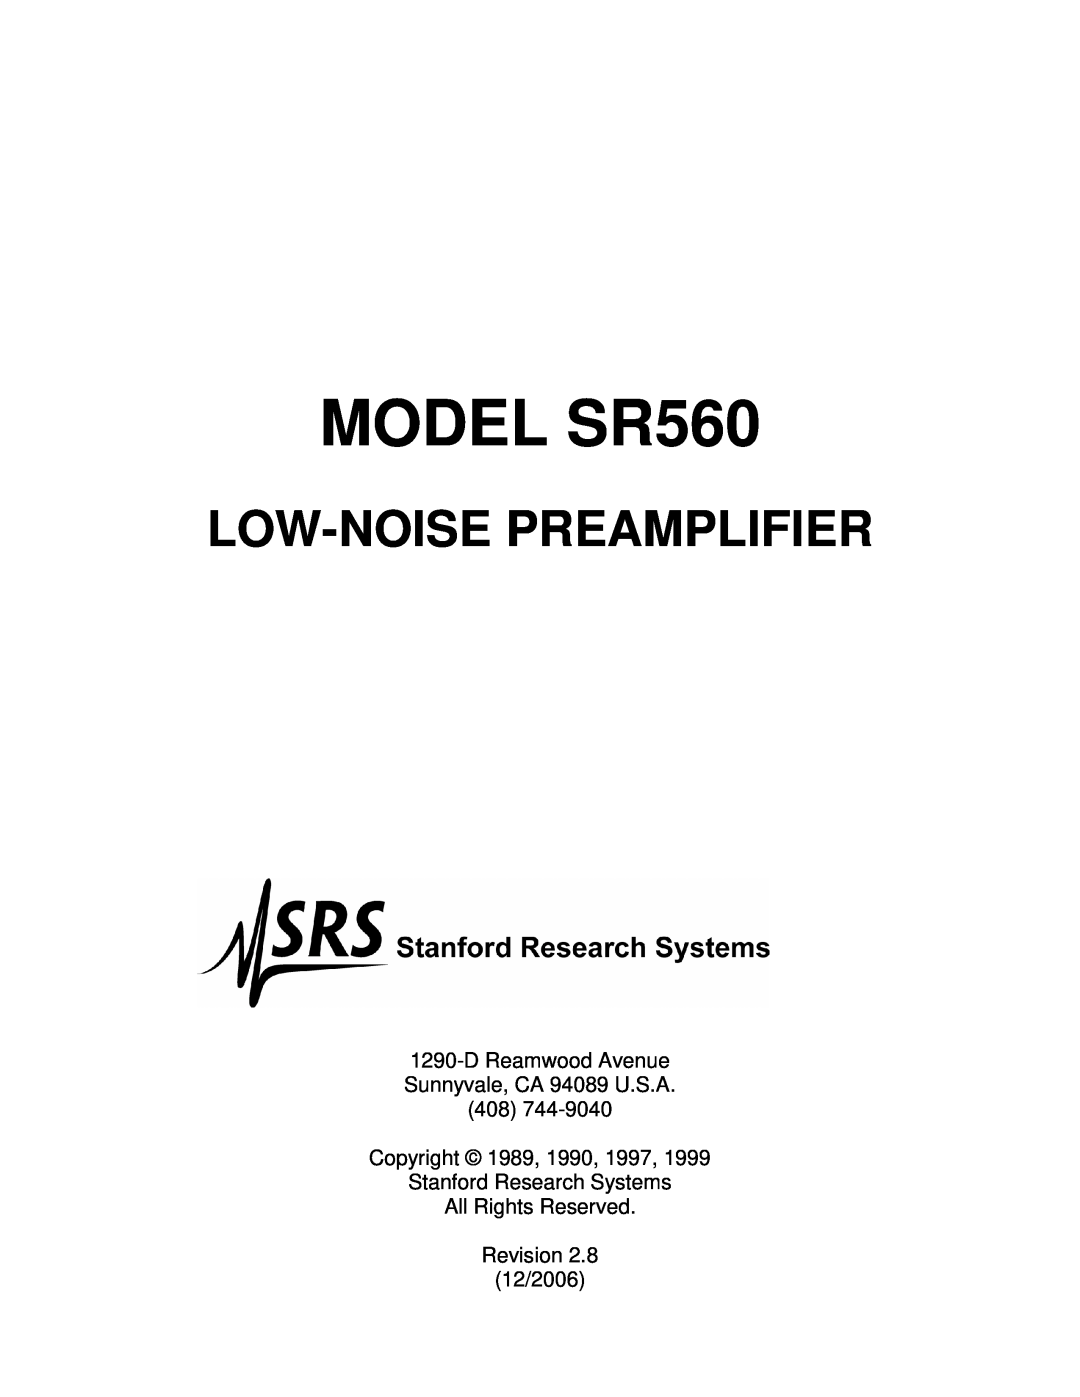 SRS Labs manual DReamwood Avenue Sunnyvale, CA 94089 U.S.A, Copyright 1989, Revision 12/2006, MODEL SR560 